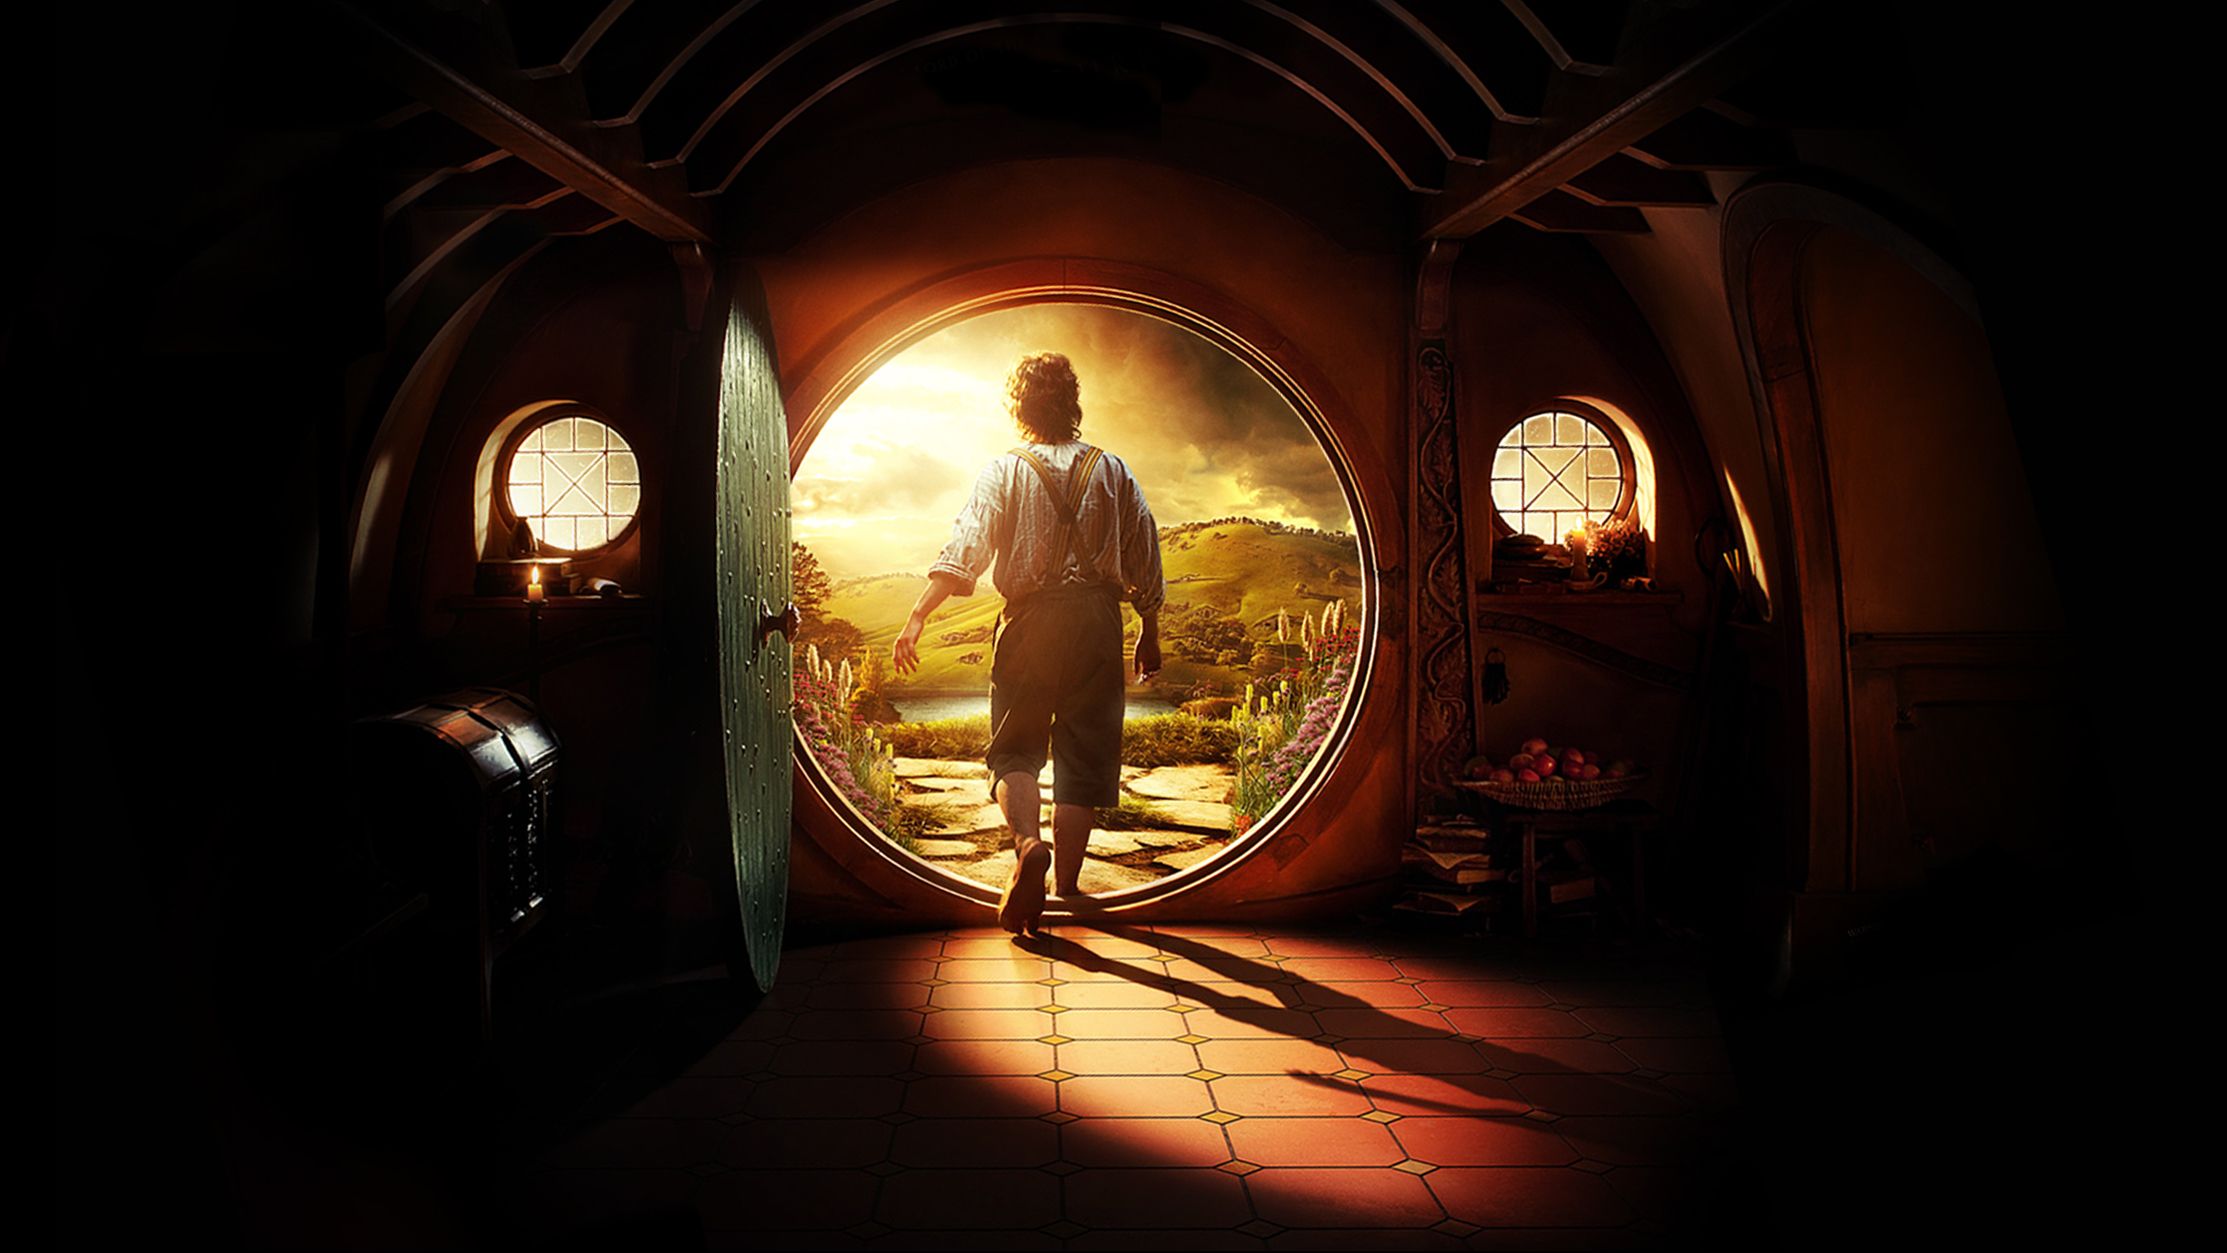 The Hobbit - Bilbo Baggins Wallpaper - The Hobbit Photo (33042280 ...